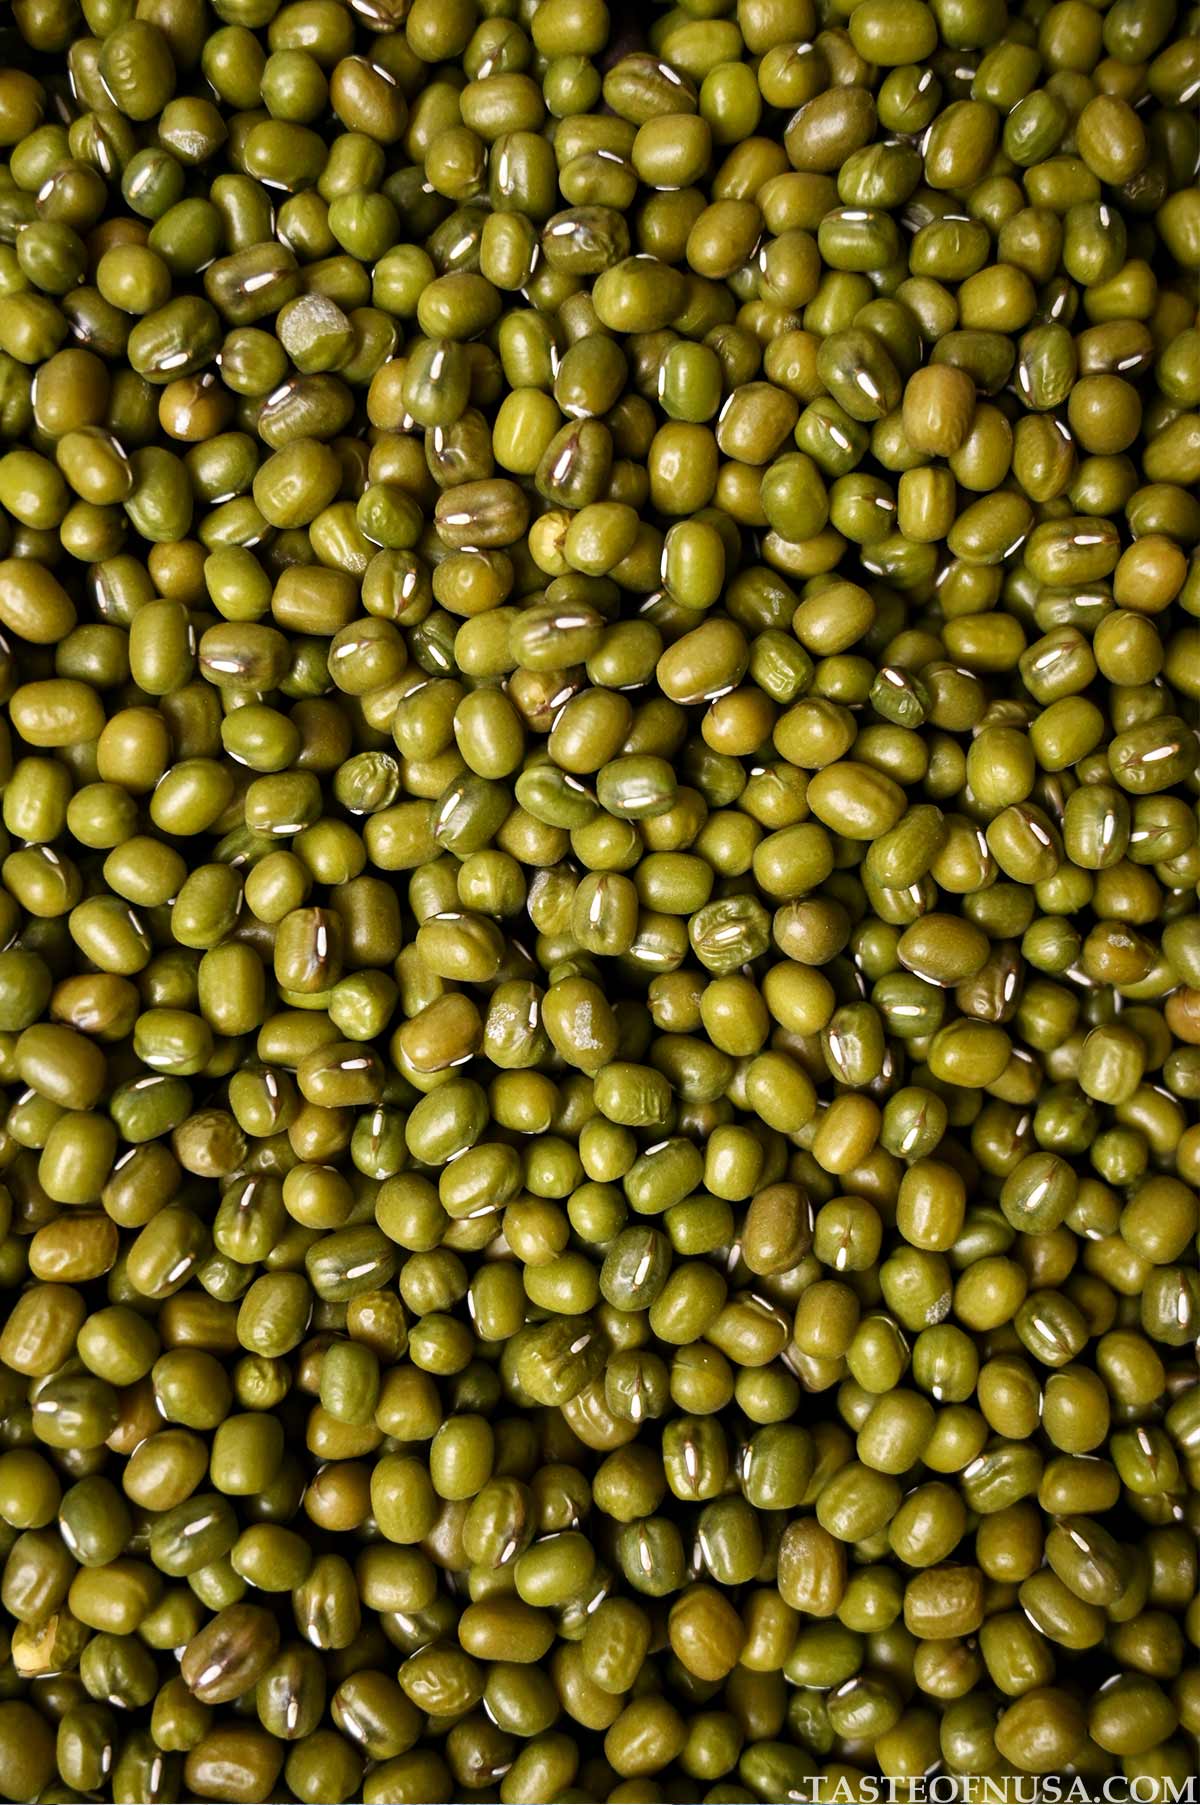 dried mung beans or green beans